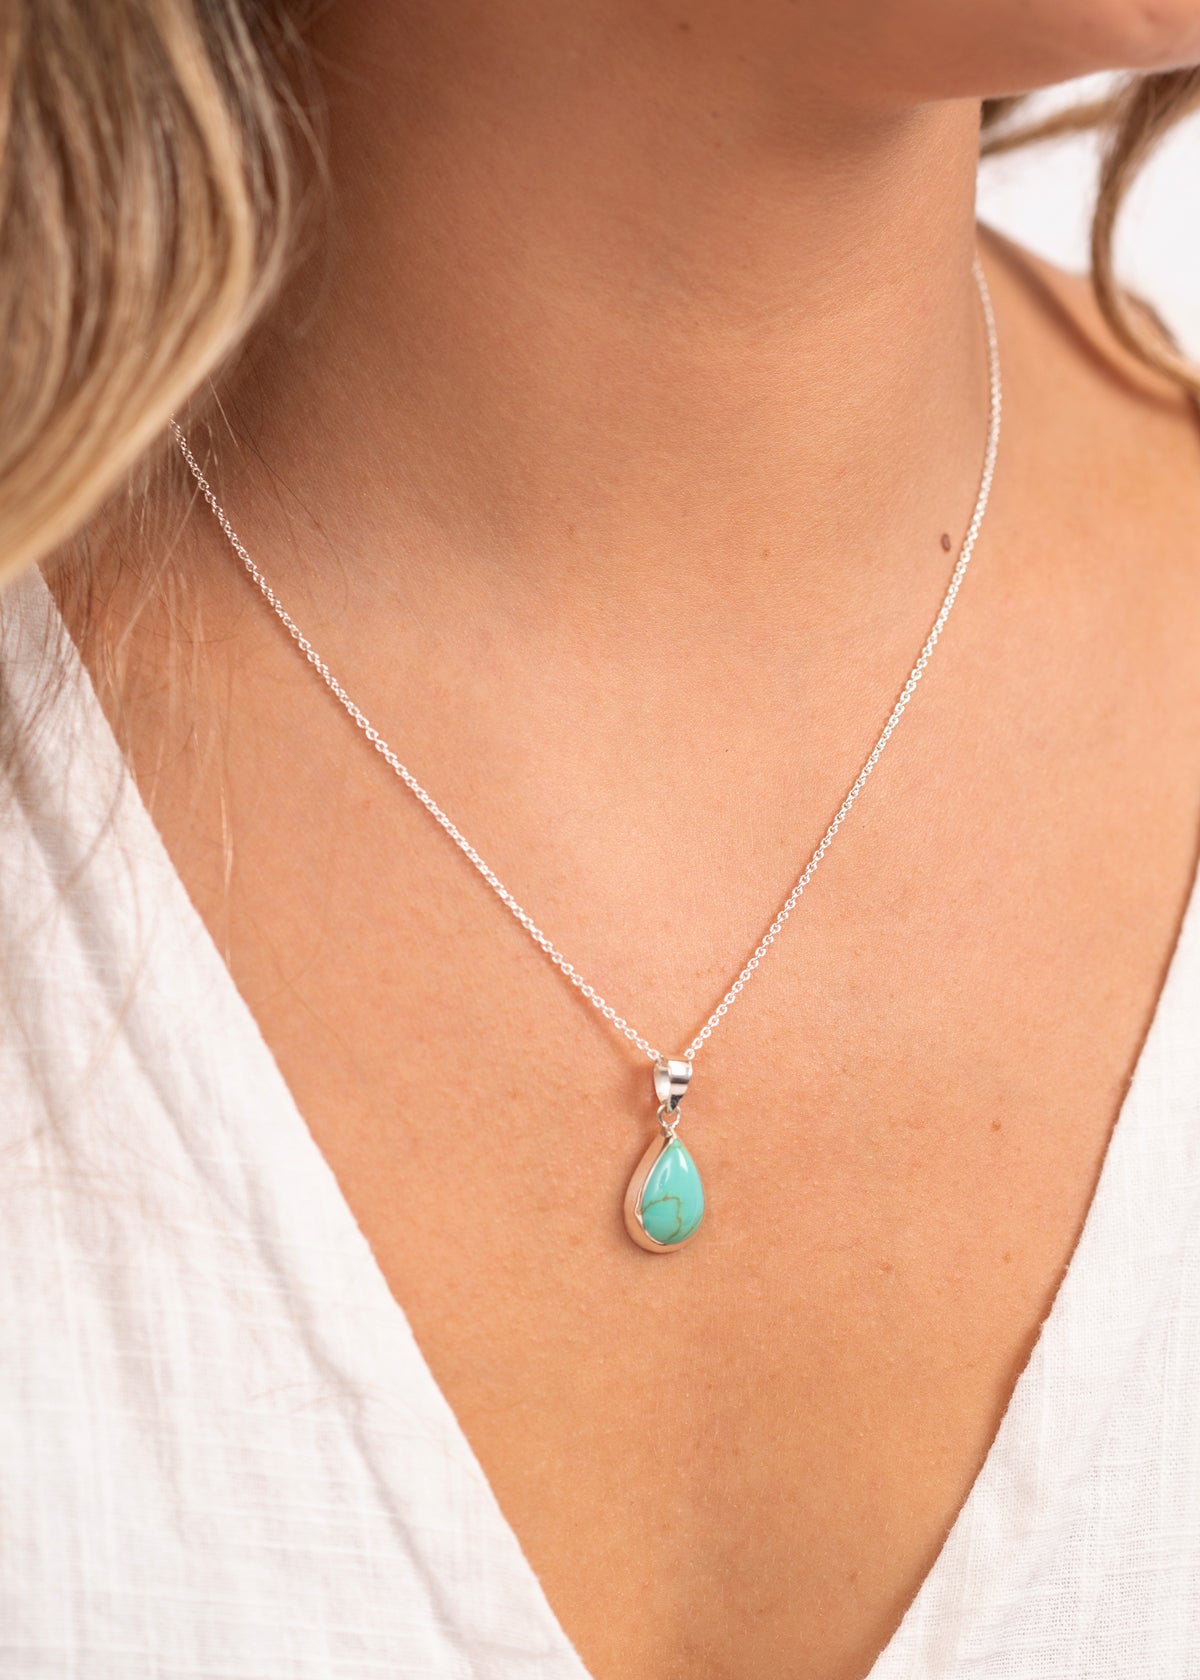 Turquoise Ocean Drop Necklace by Yemaya